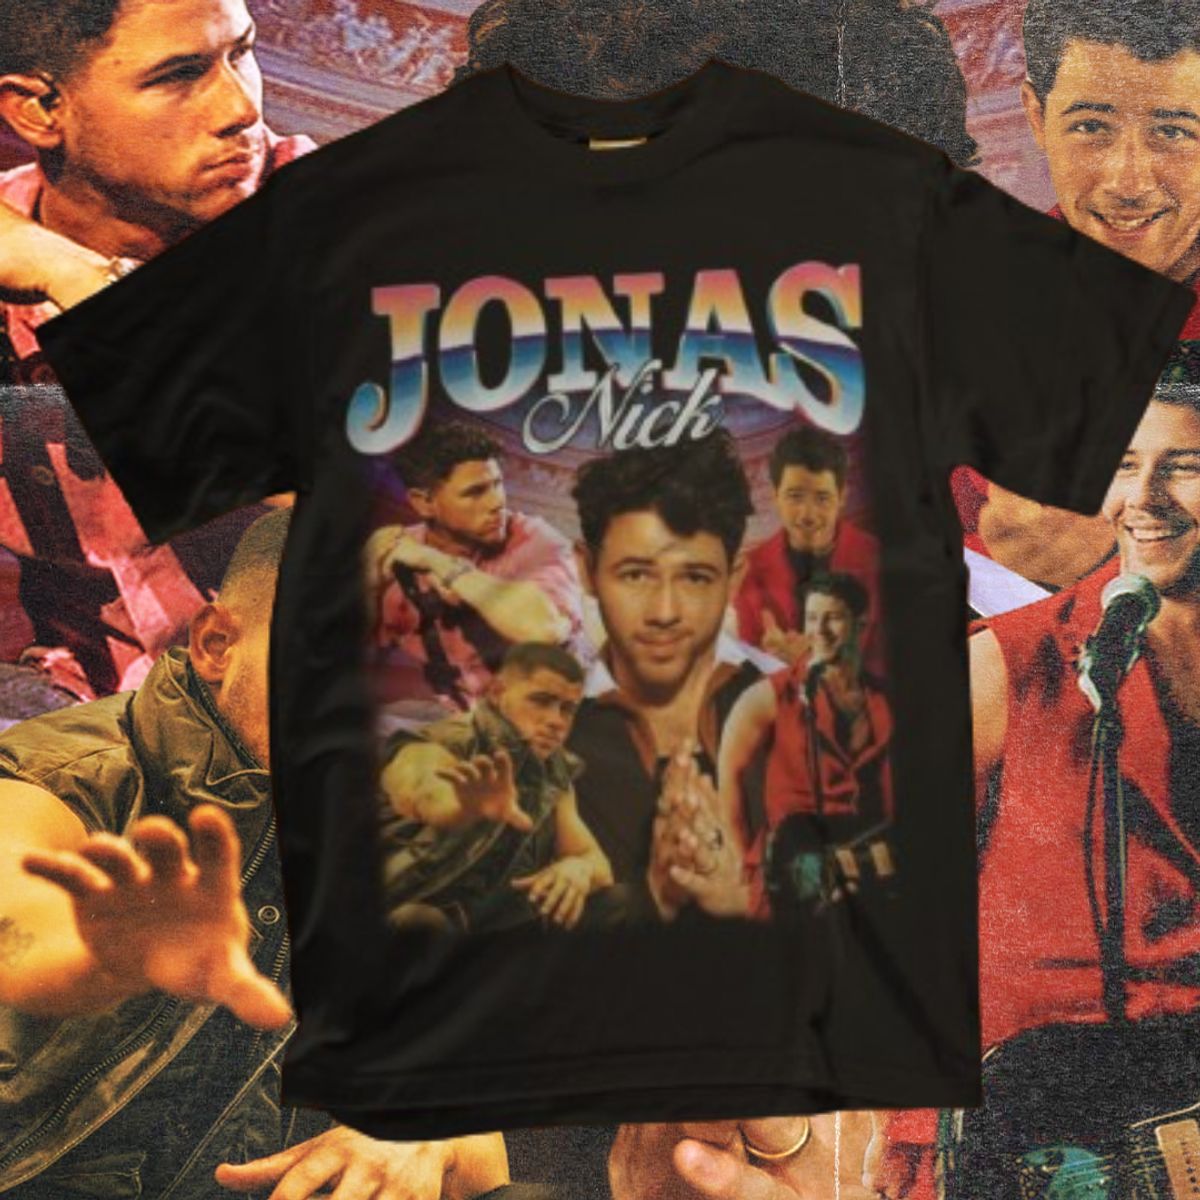 Nome do produto: Camiseta Nick Jonas 